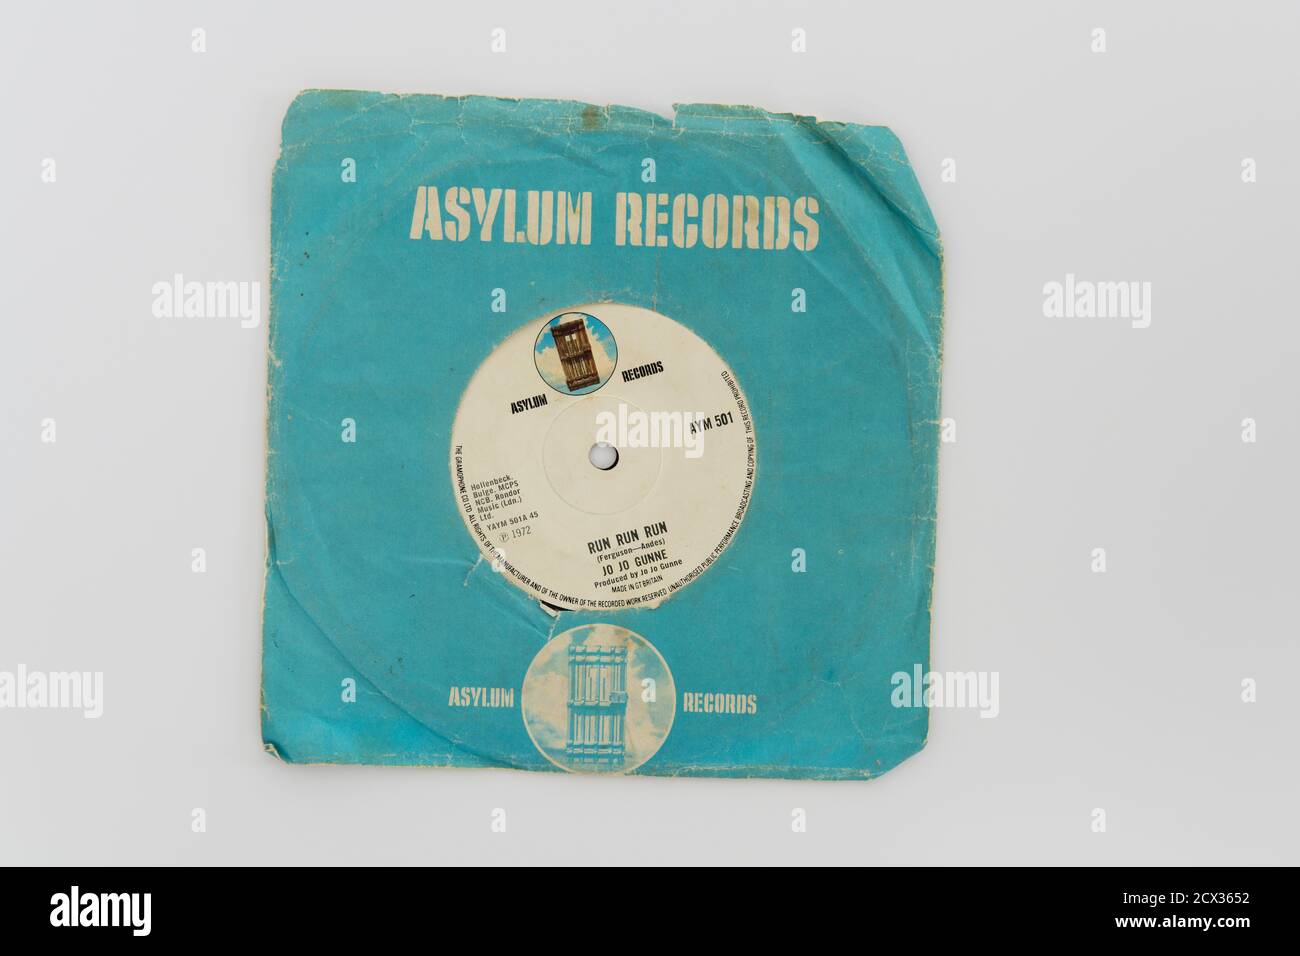 Asylum Records - Jo Gunne - Run Run Run Run Run - 1972 single que muestra la primera variación de la etiqueta de asilo Foto de stock